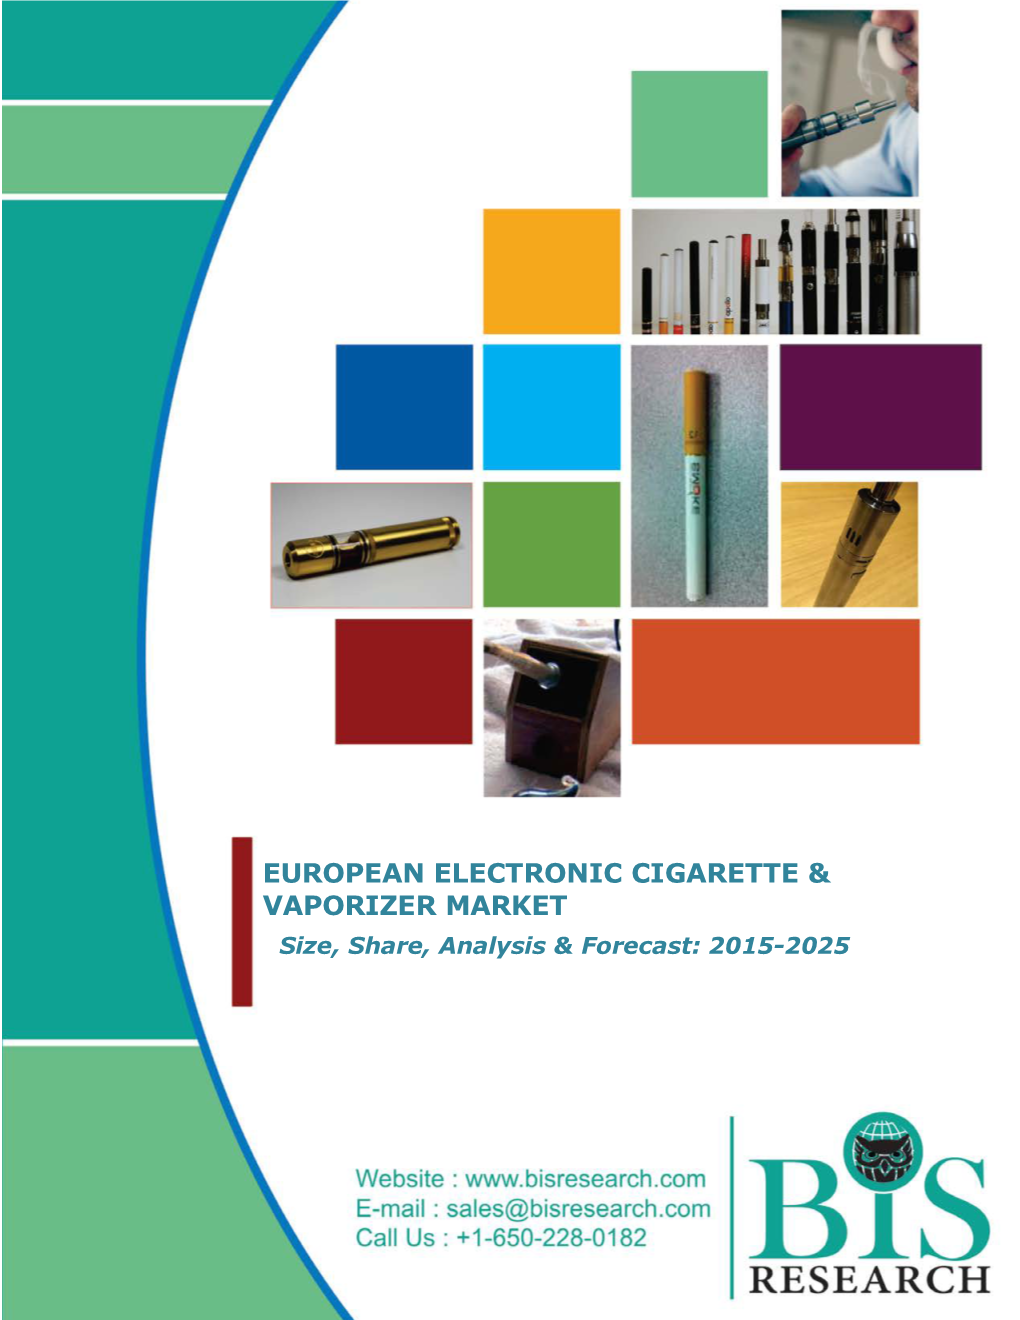 European Electronic Cigarette & Vaporizer Market